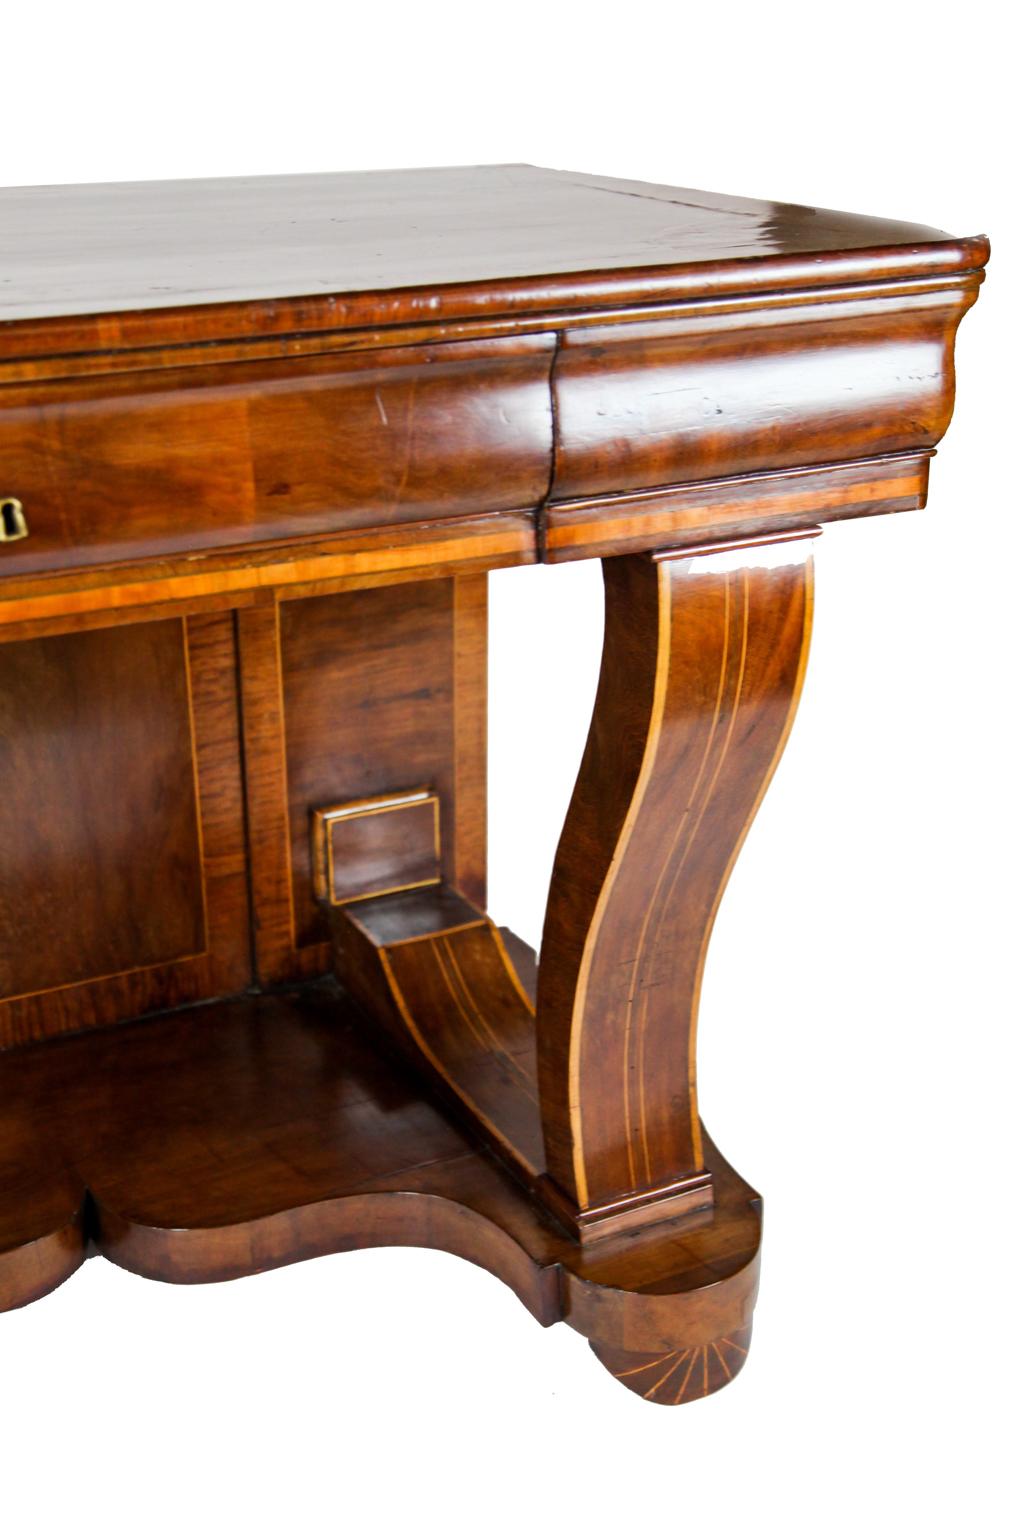 German 19th Century Inlaid Biedermeier Console Table For Sale